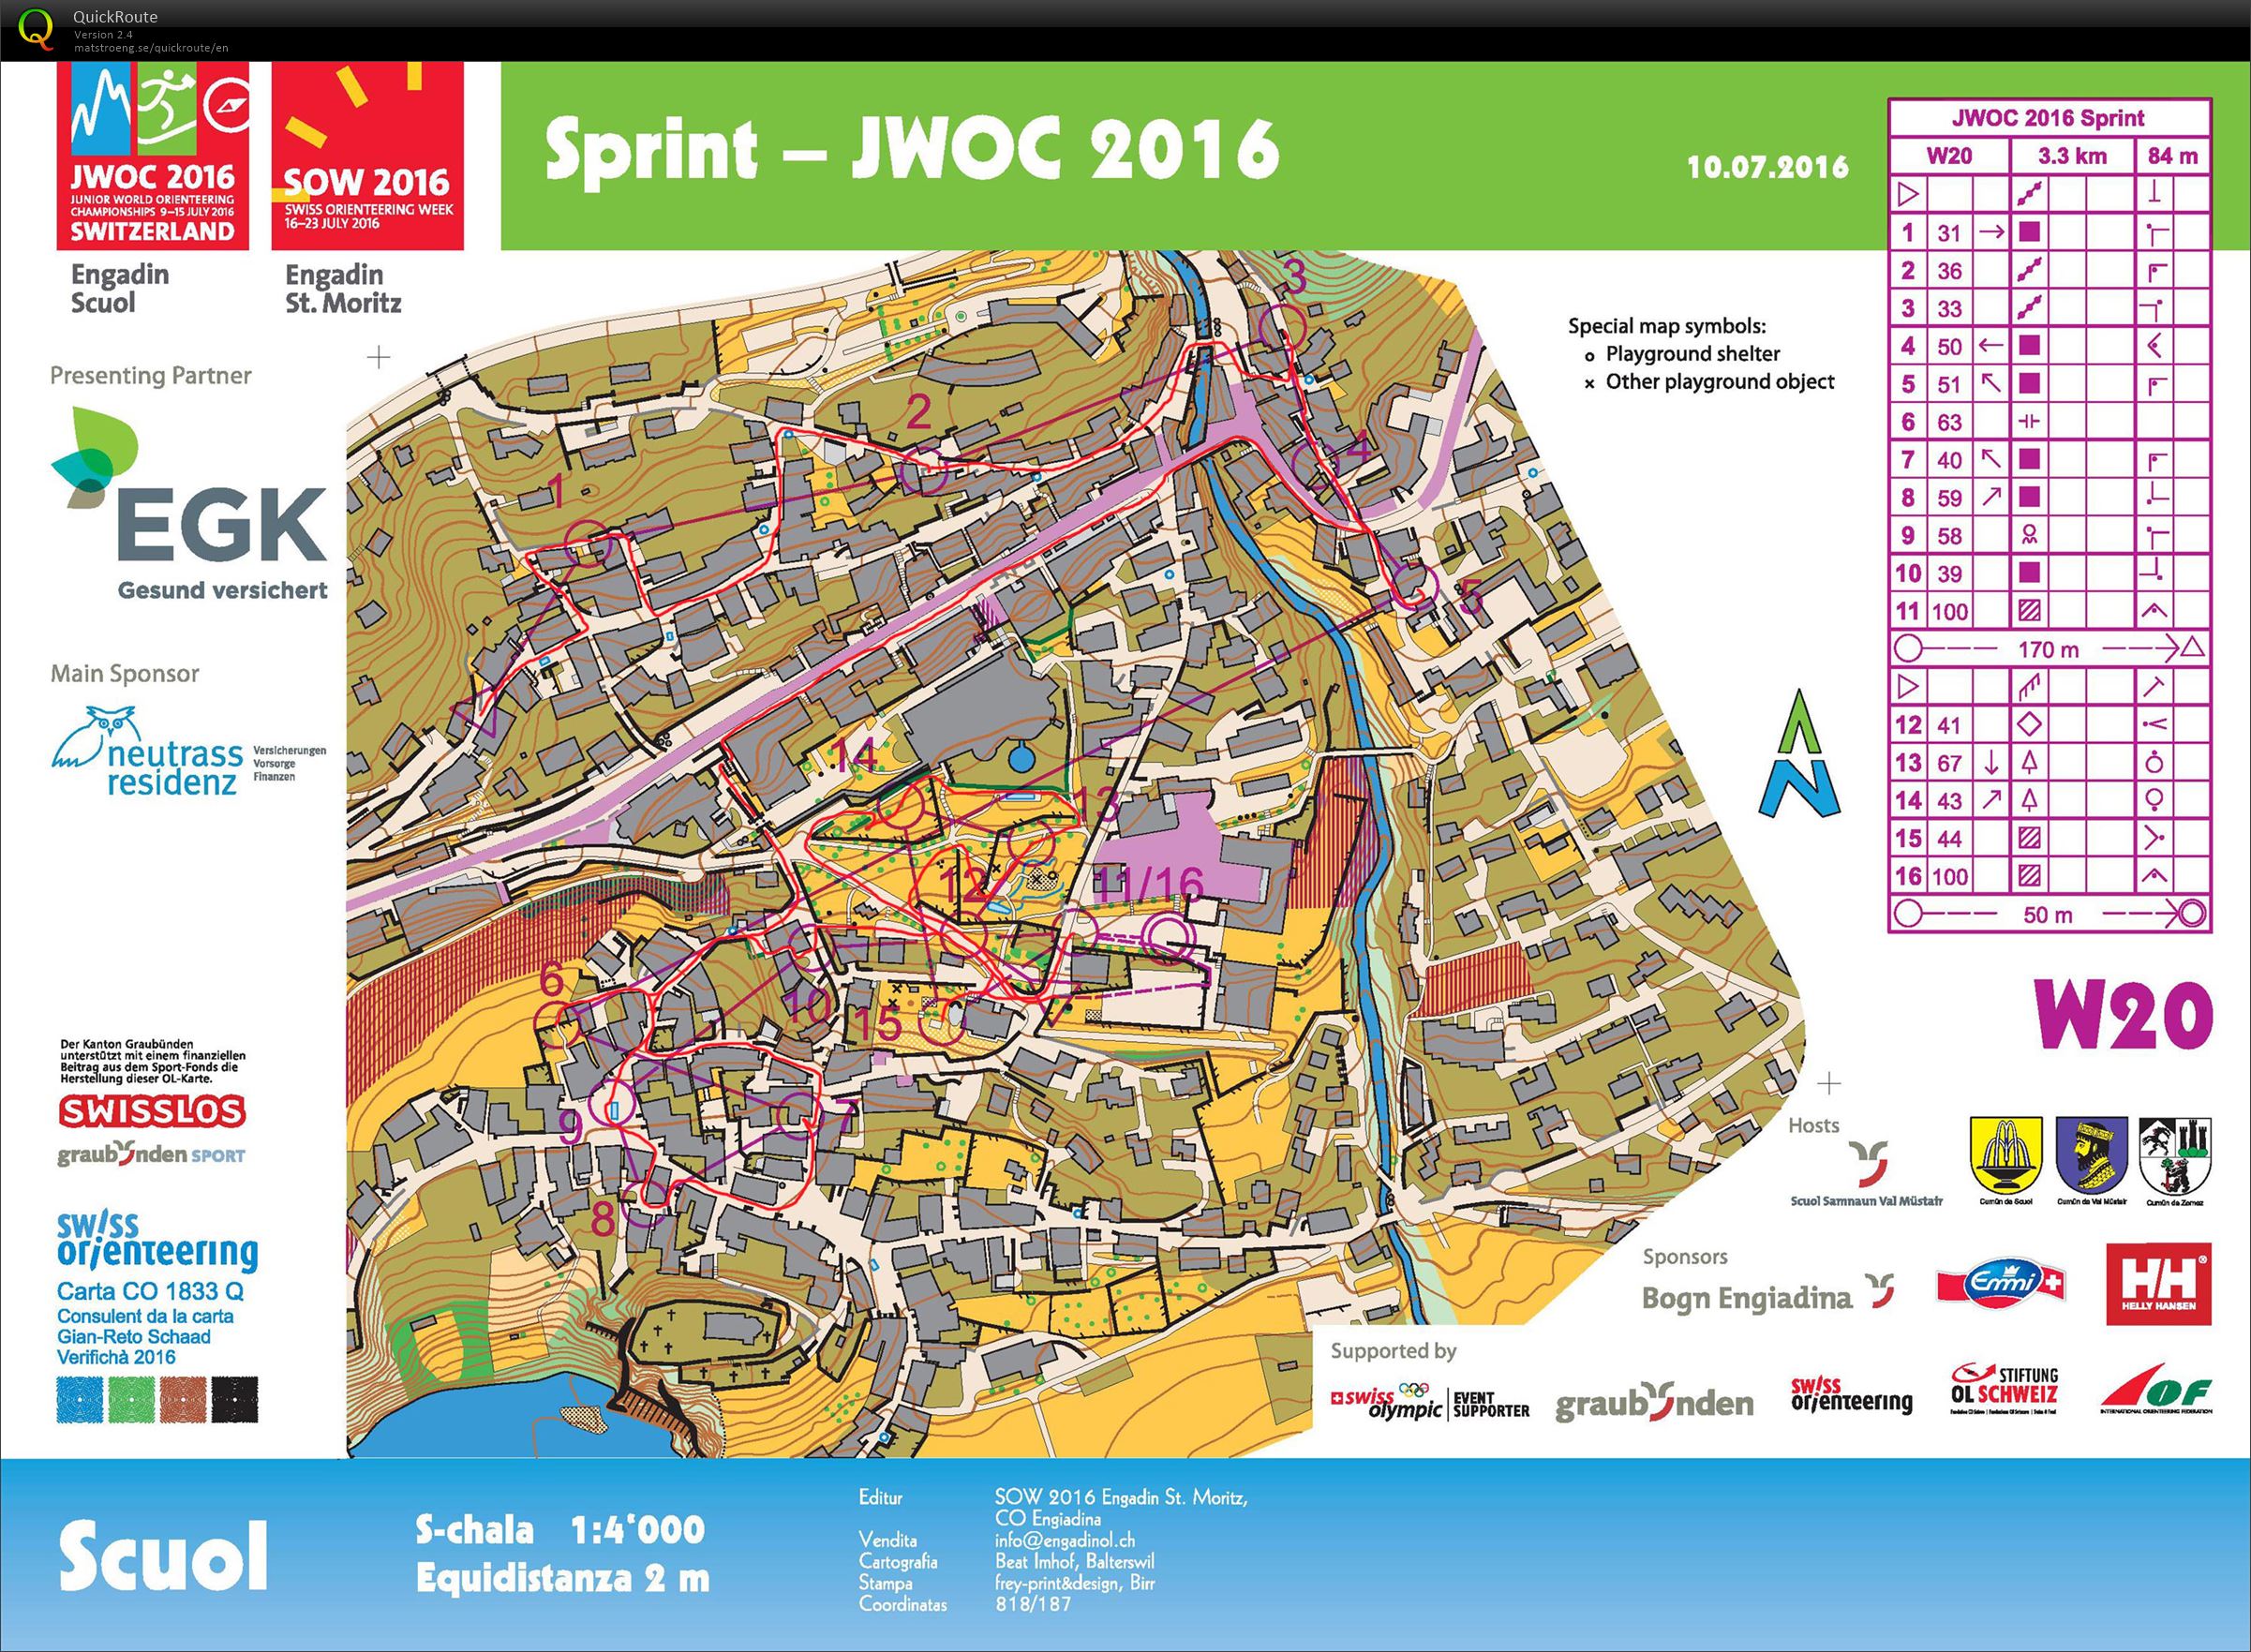 JWOC 2016 Sprint (2016-07-10)